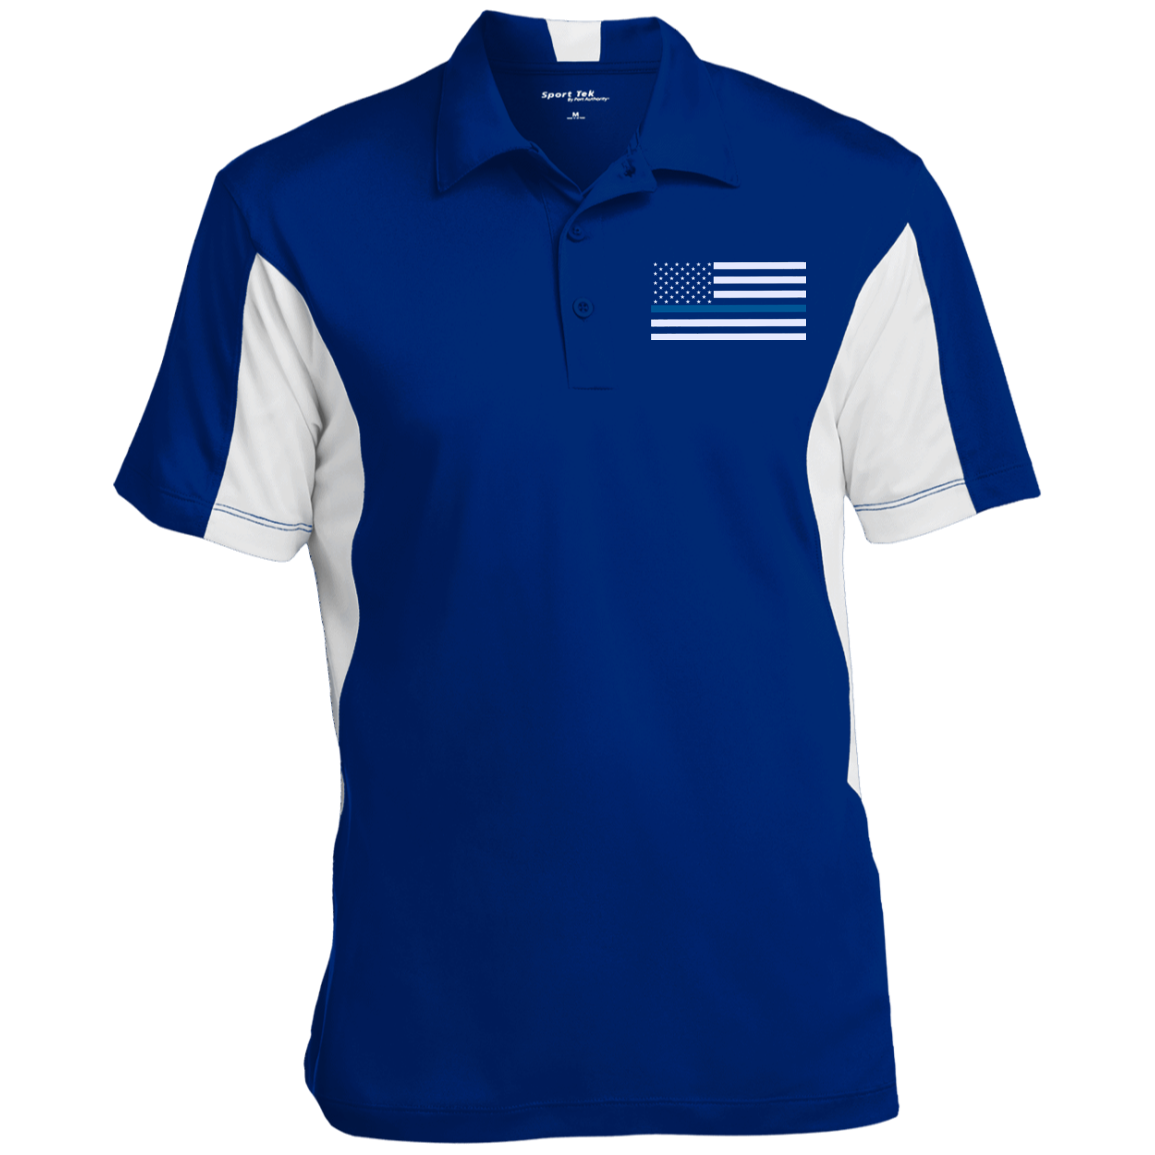 Mens Navy Blue Collar White Red Polo Shirt Short Sleeve Design Tees, $29.99